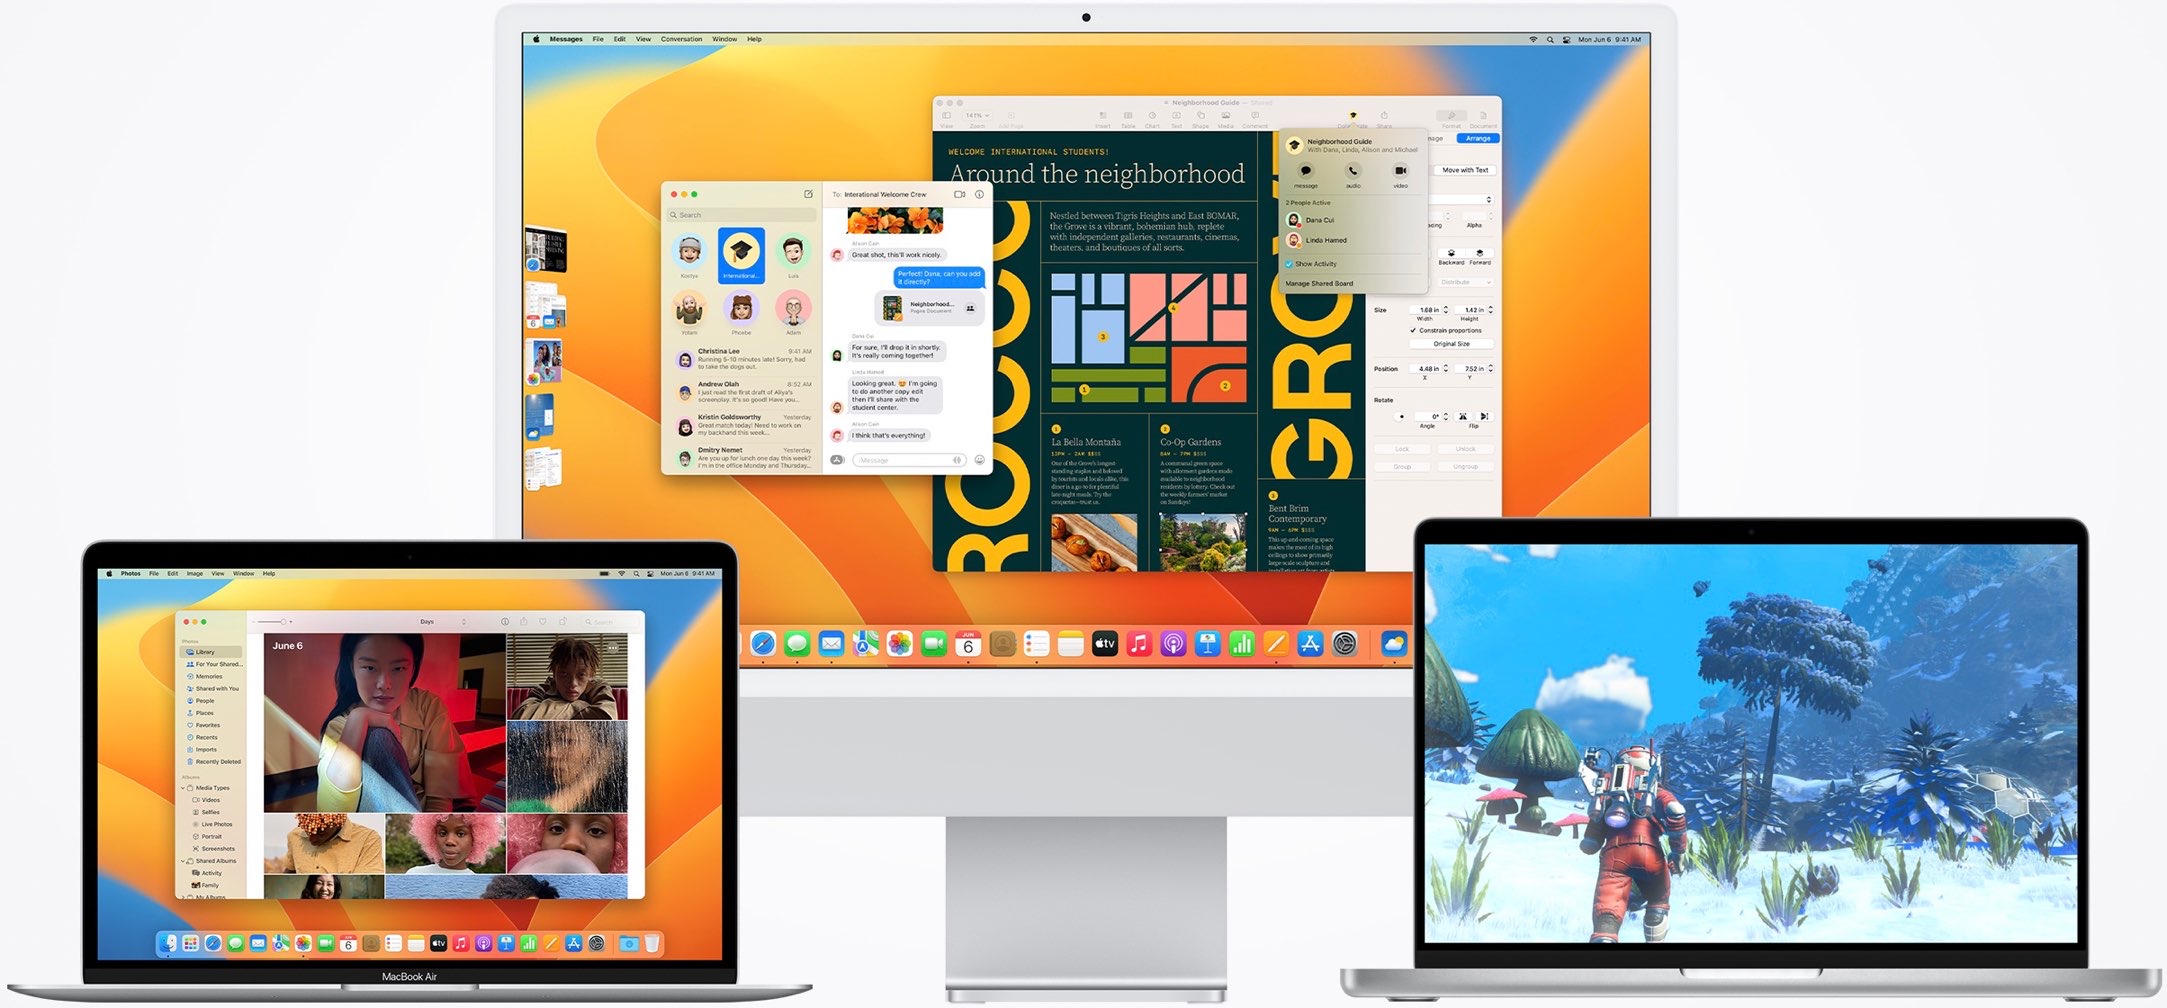 Mac OS Ventura